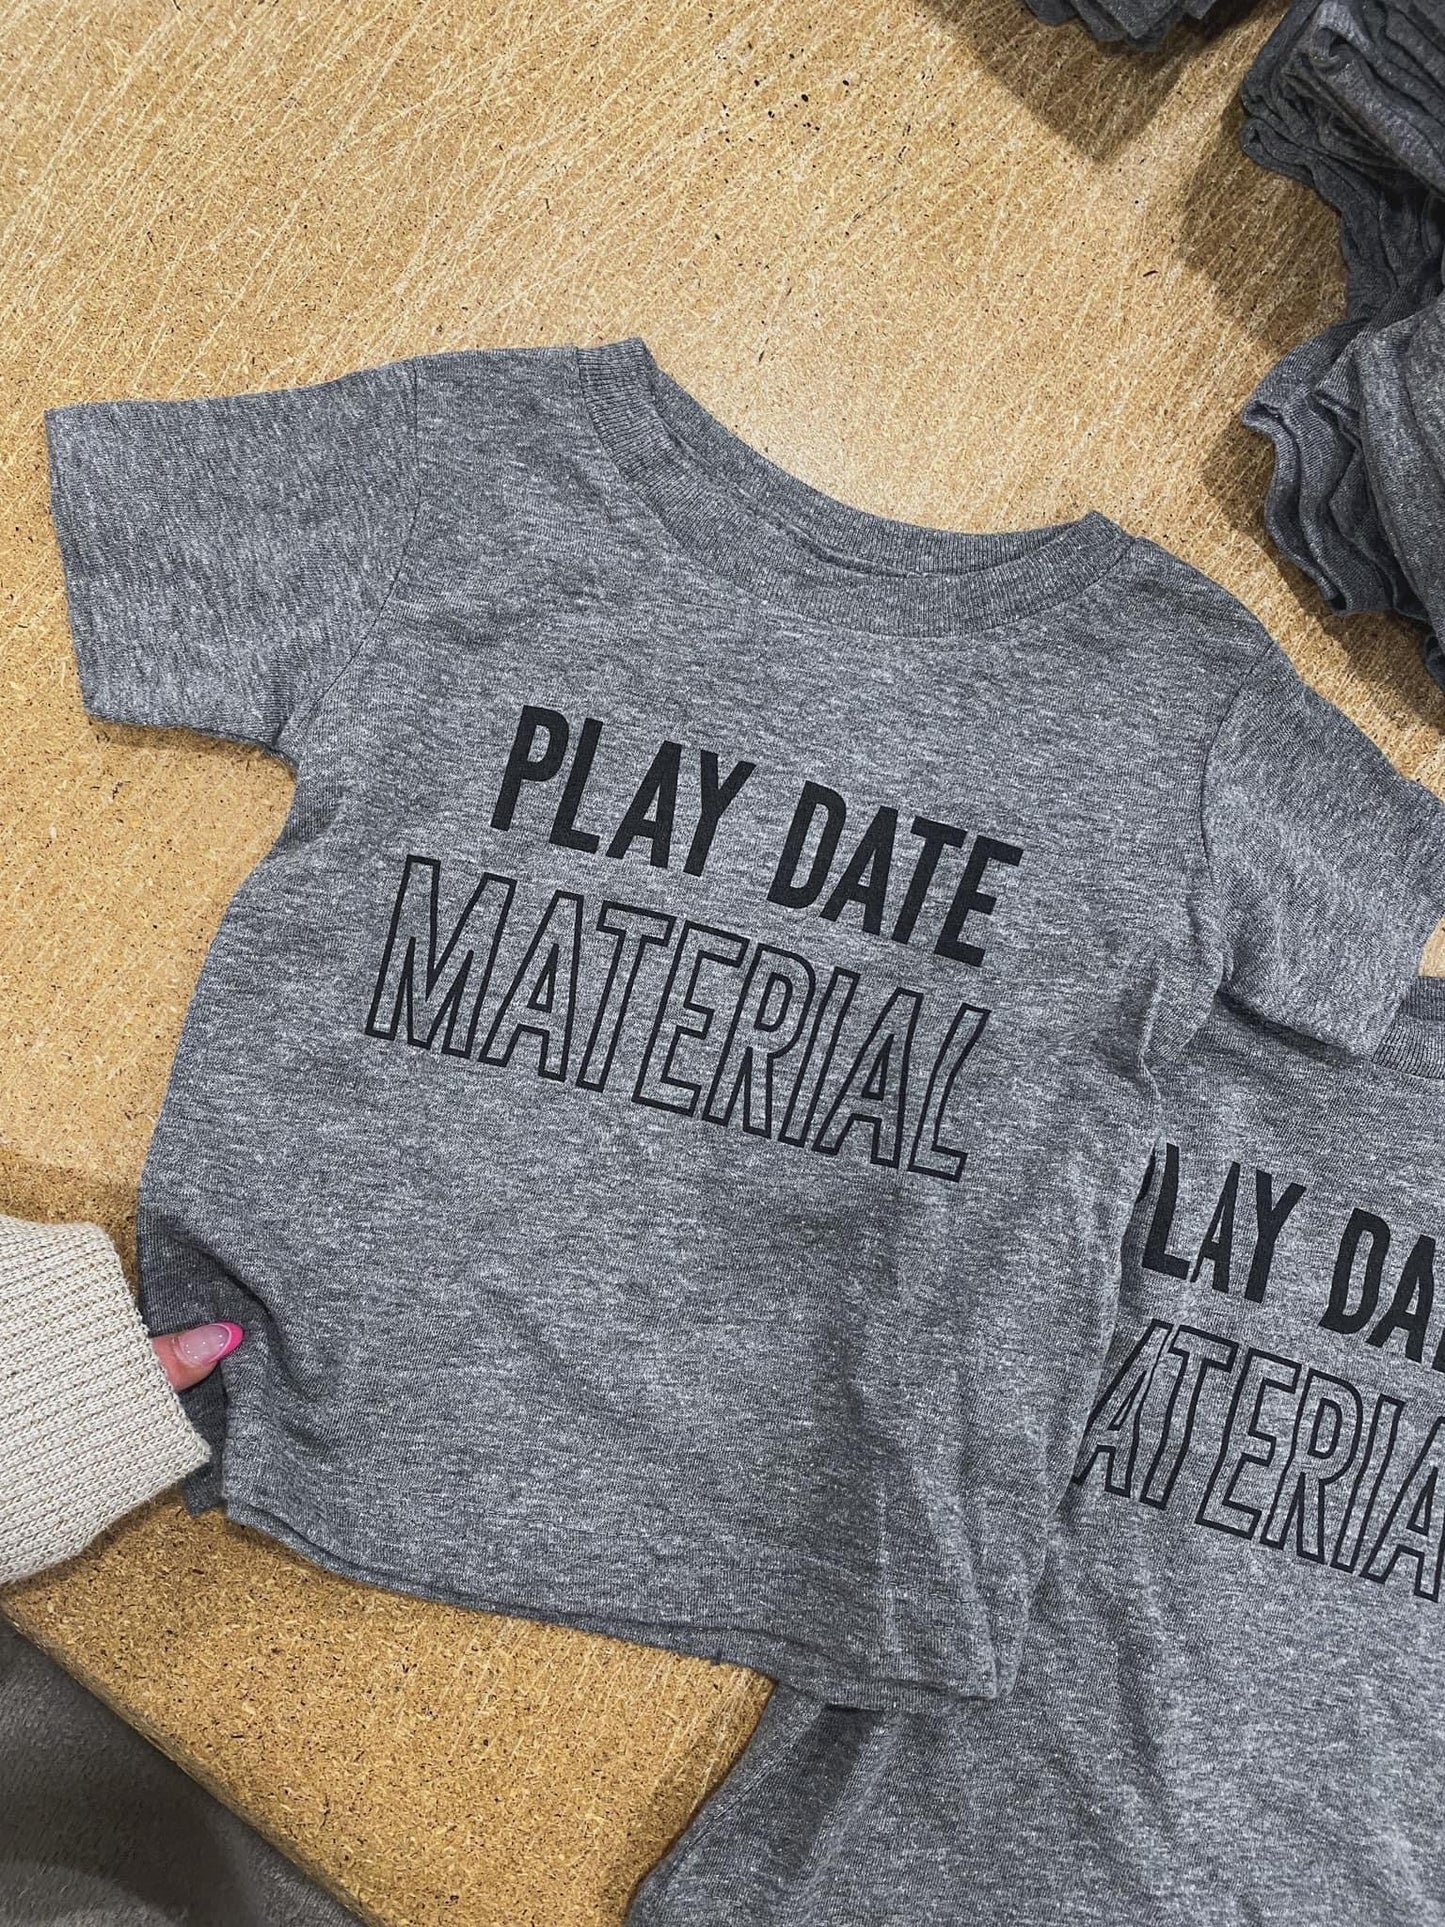 "Play Date Material" Tee